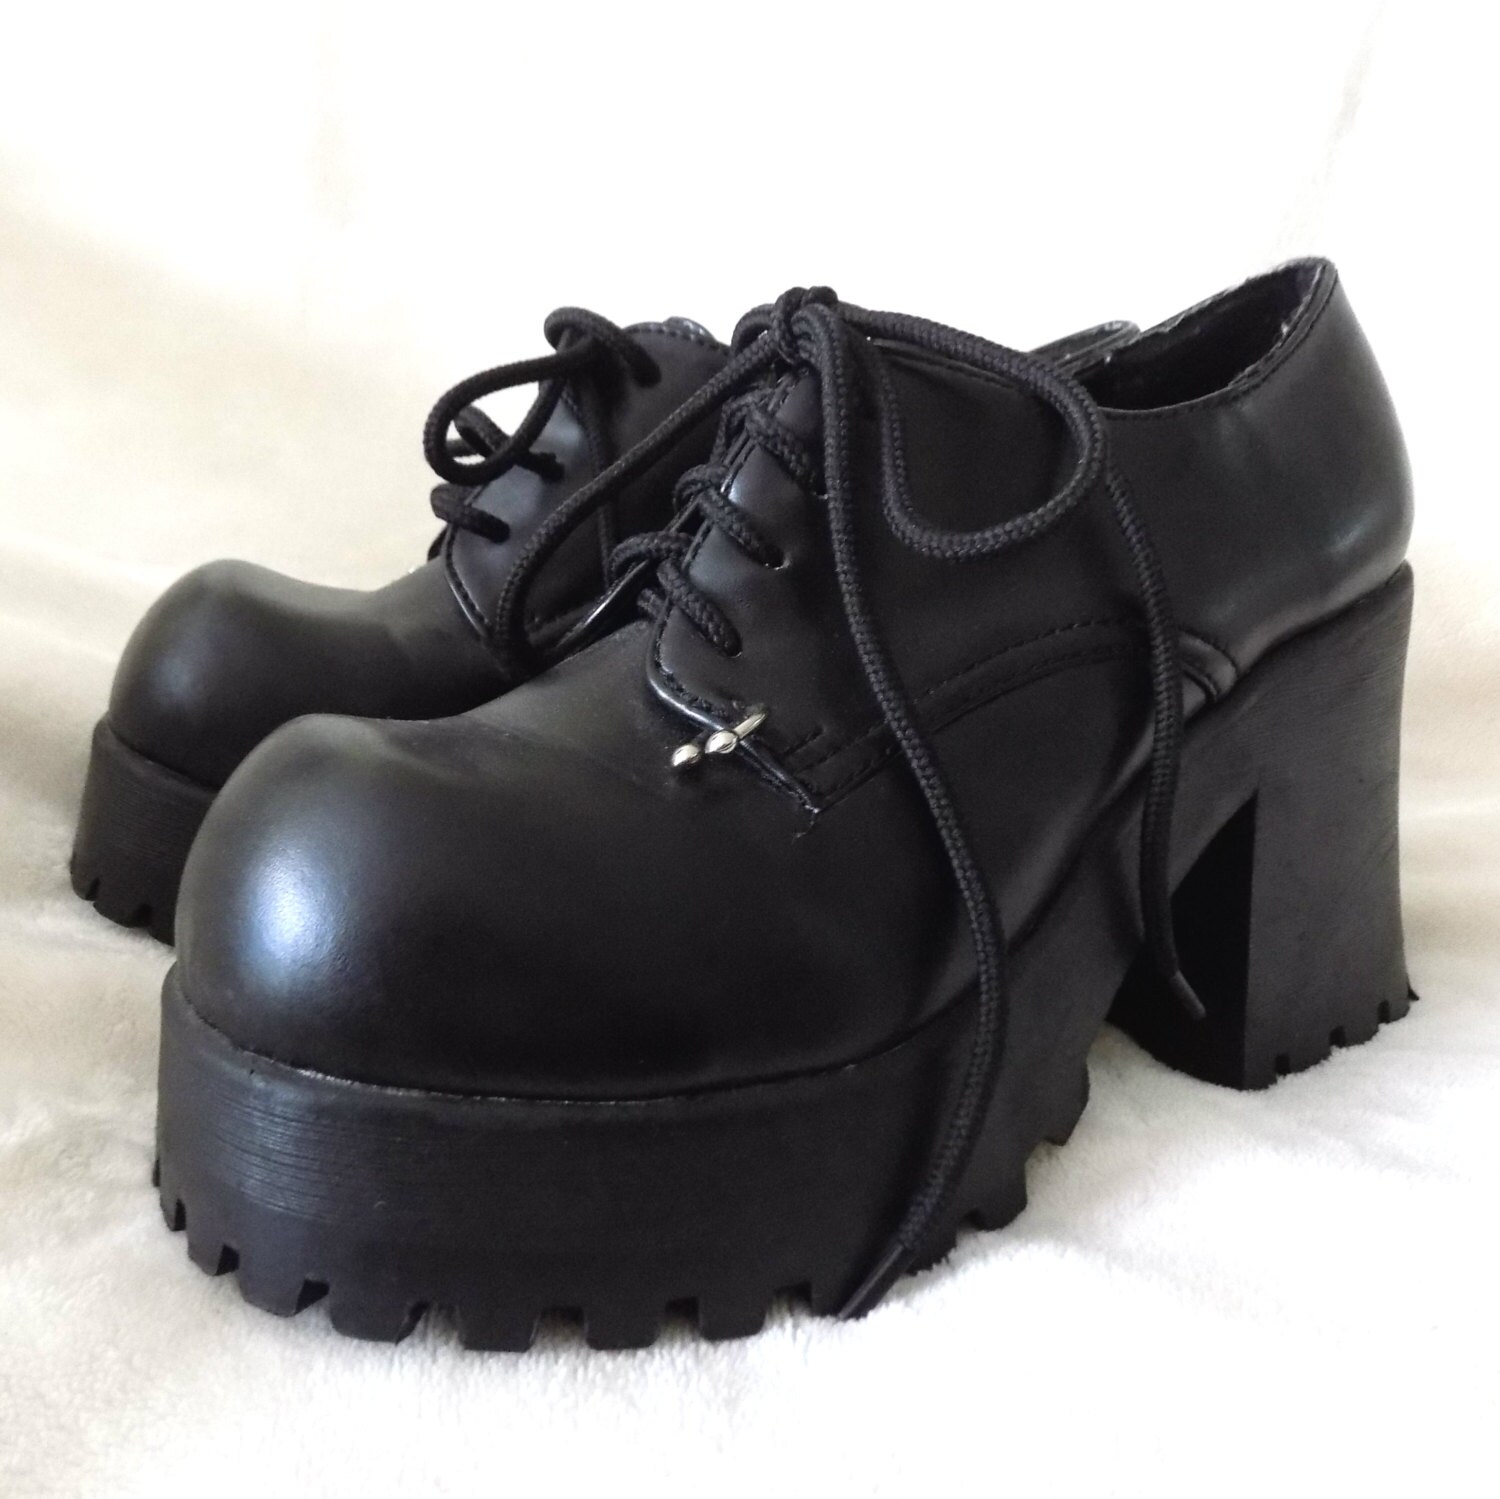 Vintage 90's Soda Platform Shoes Grunge Tumblr Edgy Goth